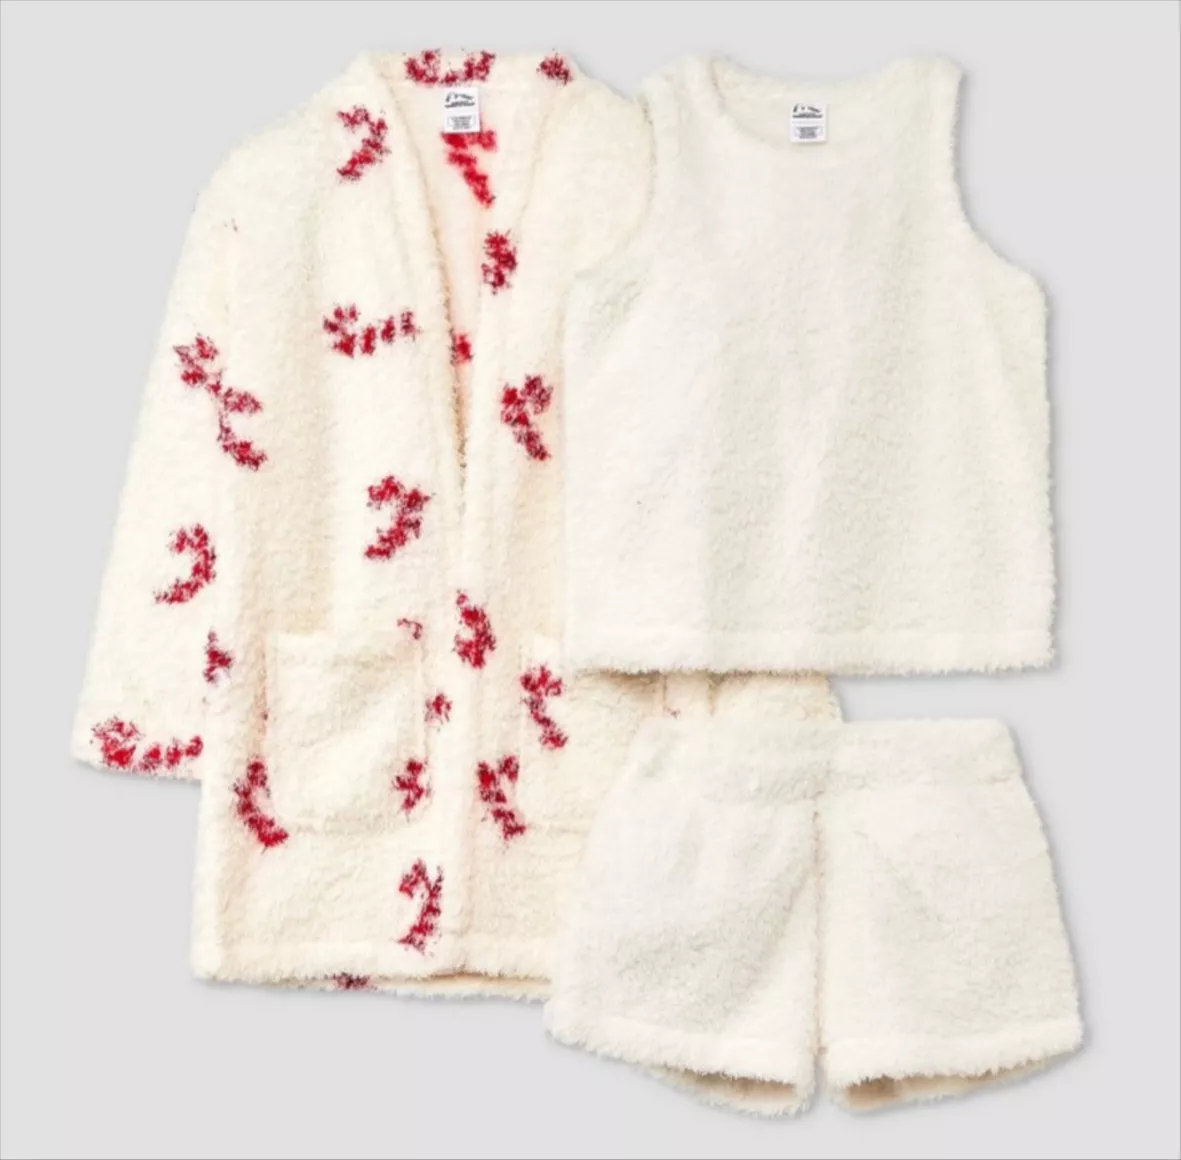 Girls' 2pc Flannel Long Sleeve Button Up Pajama Set - Art Class